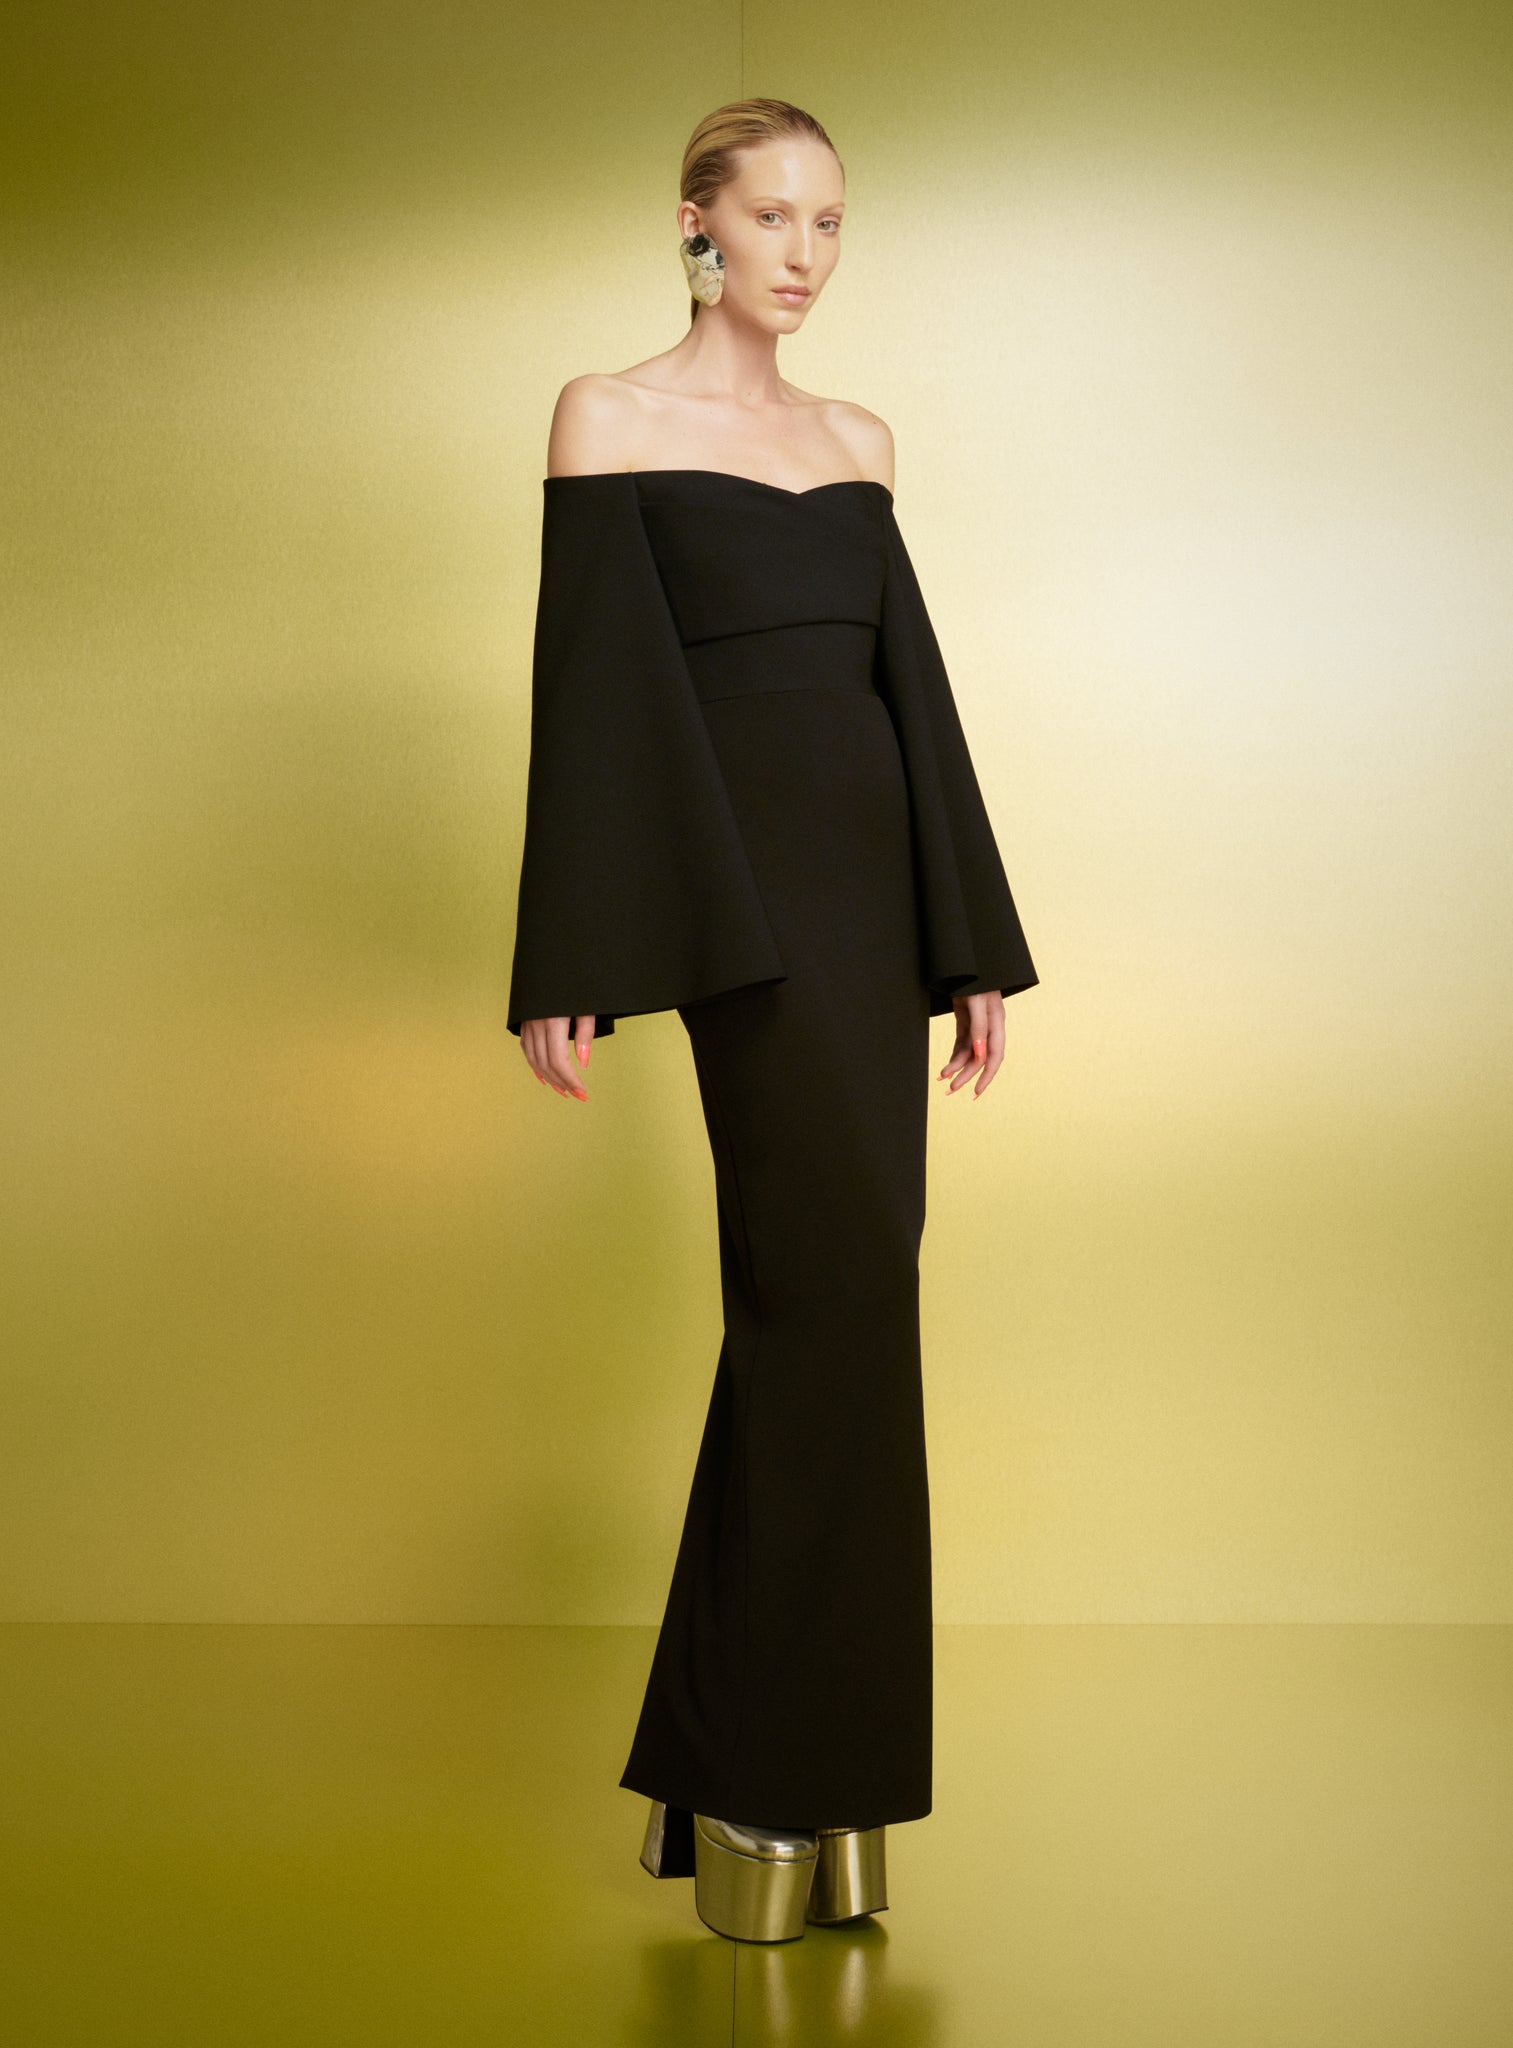 The Eliana Maxi Dress in Black